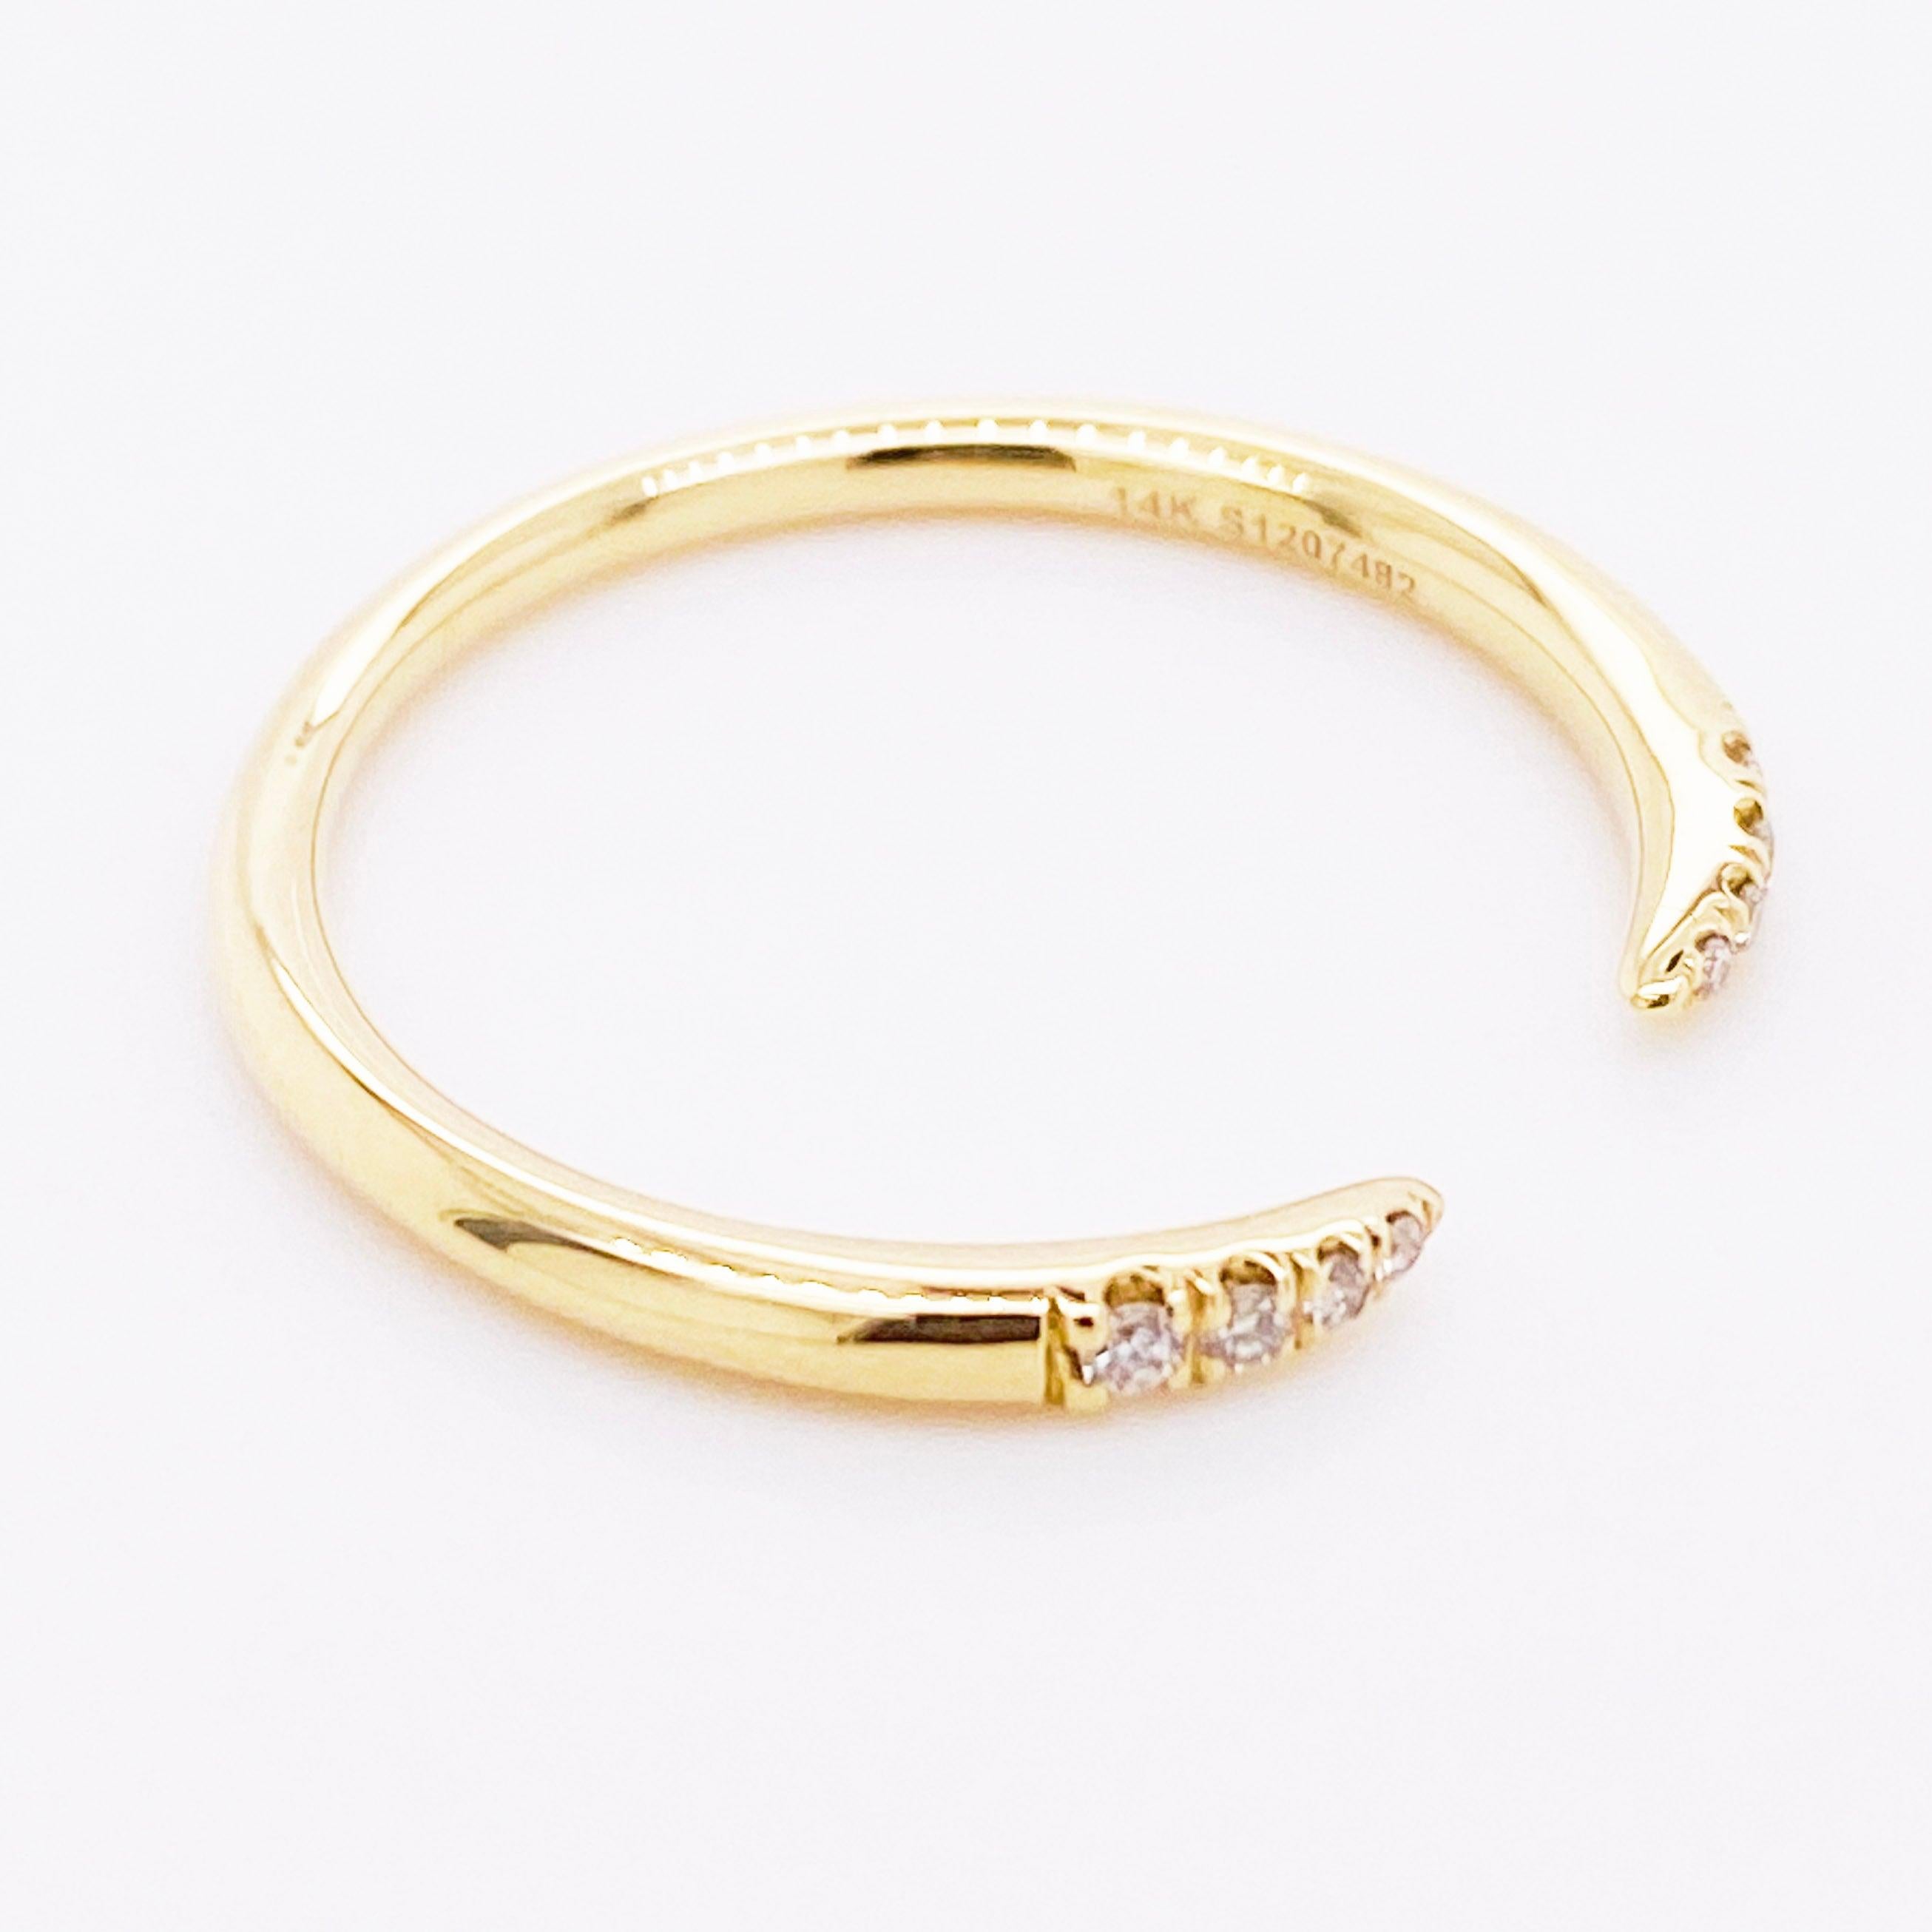 For Sale:  Diamond Open Ring, 14 Karat Yellow Gold Open Diamond Tipped Band, LR51177Y45JJ 3